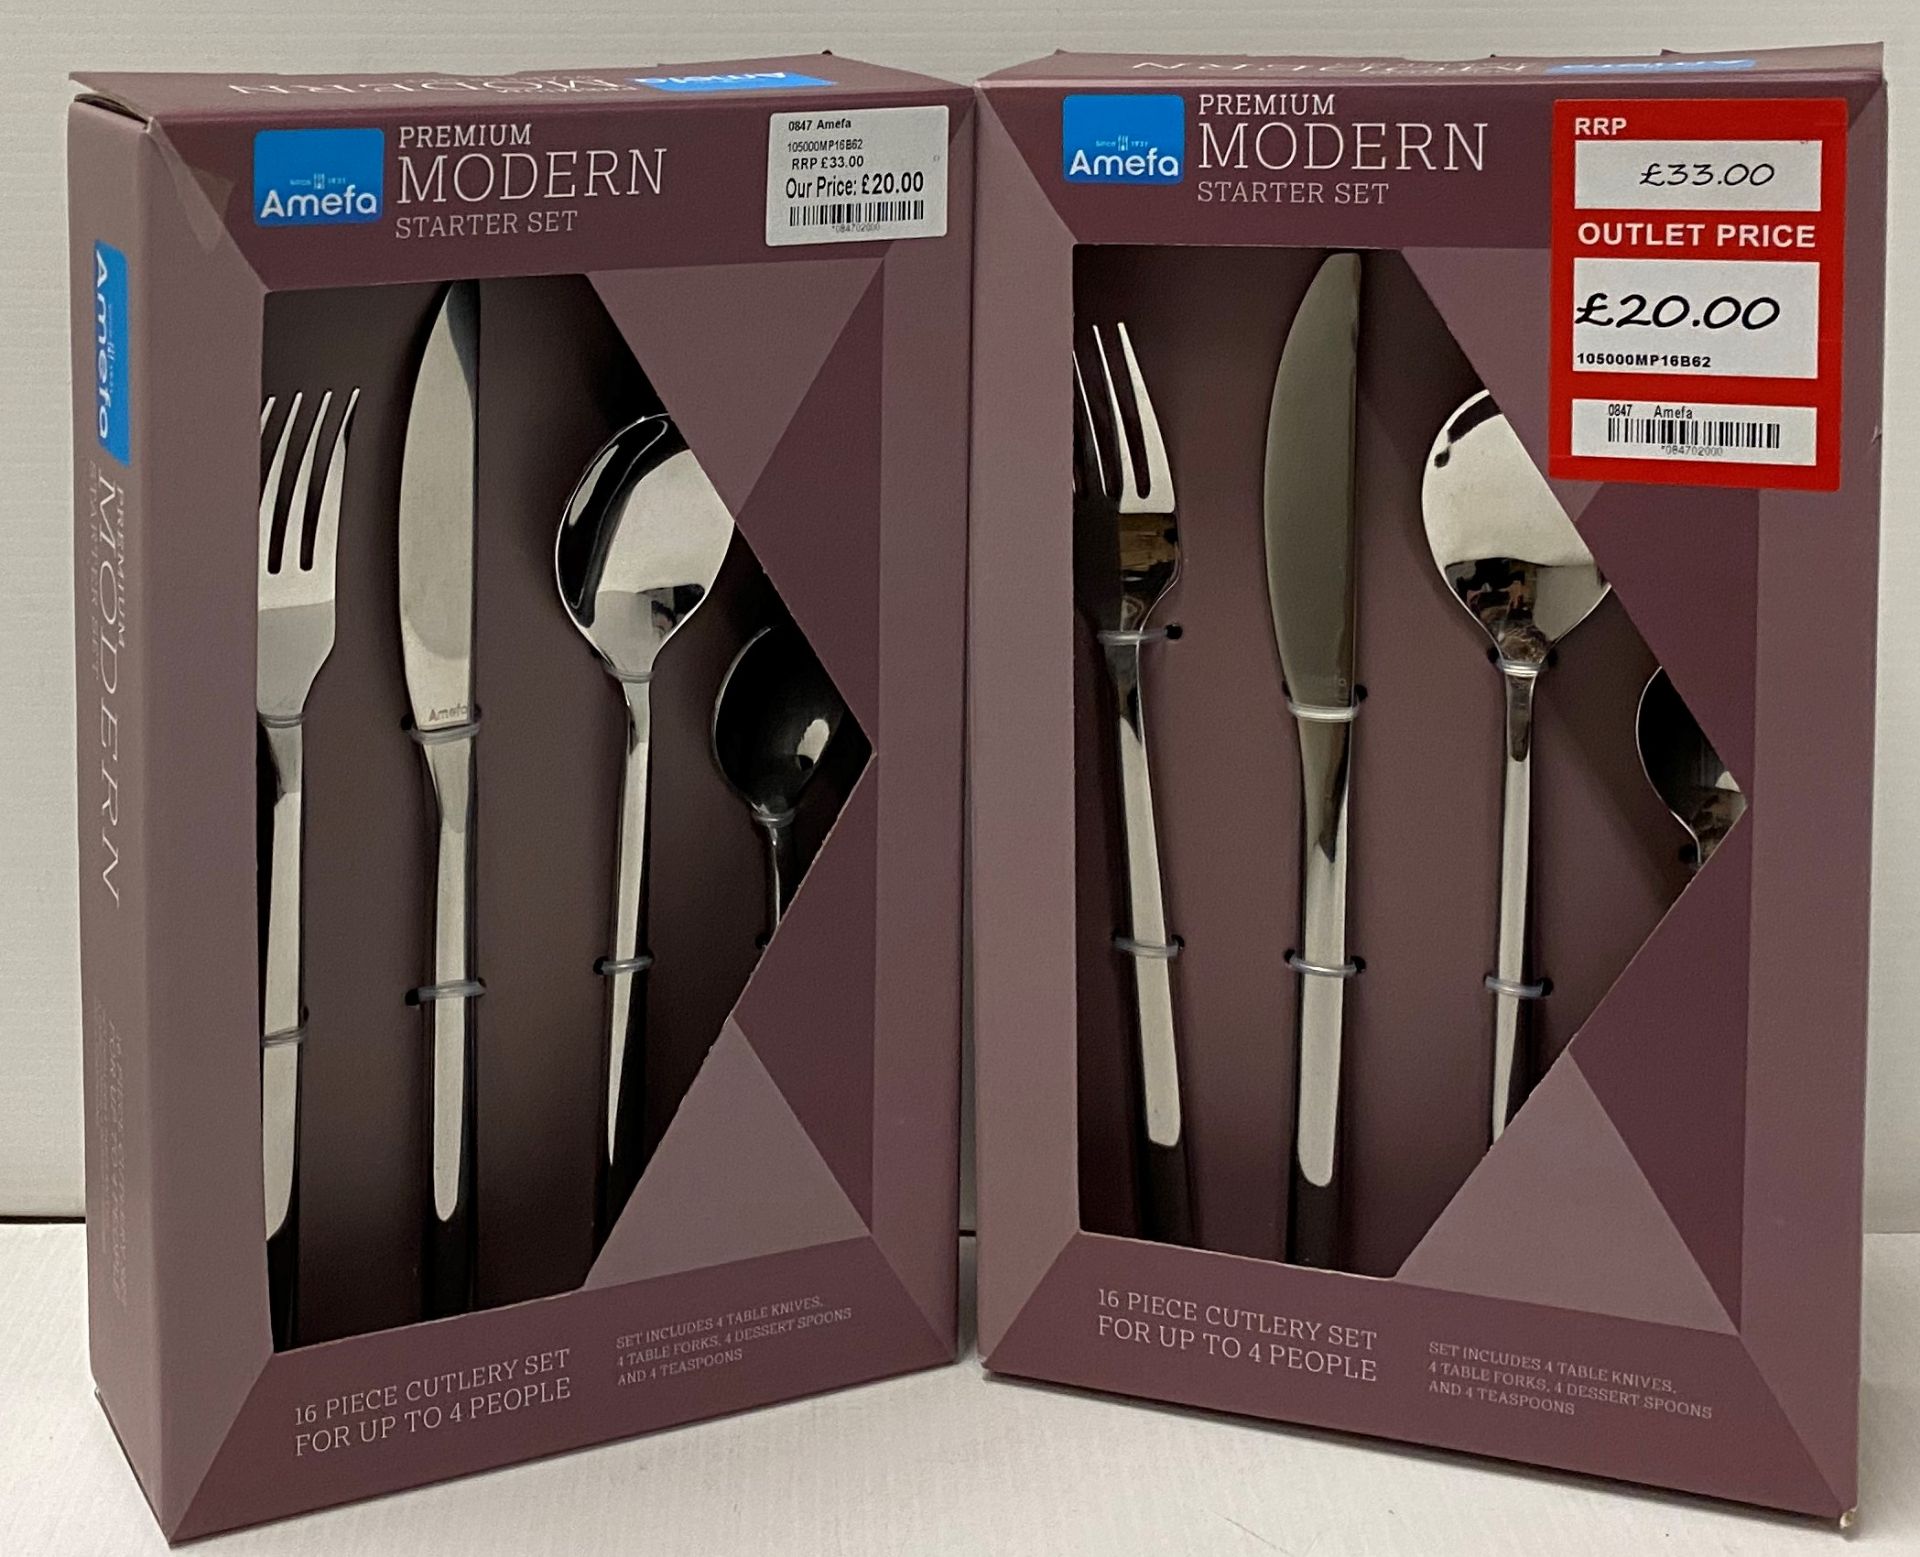 2 x Amefa Premium Modern Carlton 16 piece starter cutlery sets etc RRP £33.